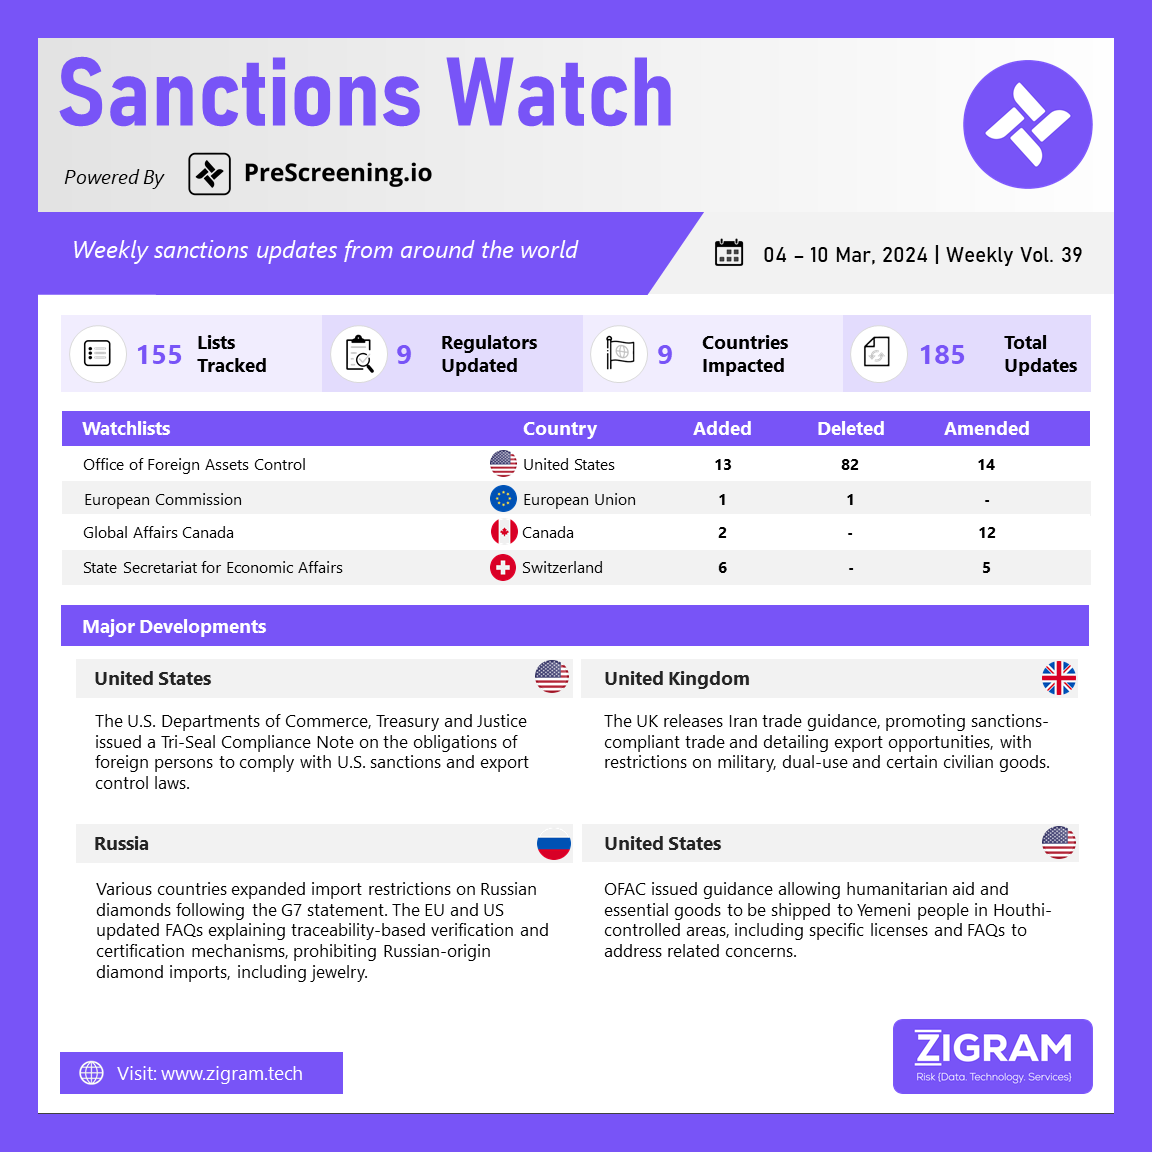 Sanctions Watch | Weekly Vol. 39 | 04 Mar – 10 Mar 2024
Powered By- PreScreening. IO

To read more – tinyurl.com/mr2vmw2d
Product Insights - prescreening.io

#ExportControlLaws #Iran #Japan #Canada #Switzerland #G7 #OFAC #Yemen #Houthi #SanctionsWatch